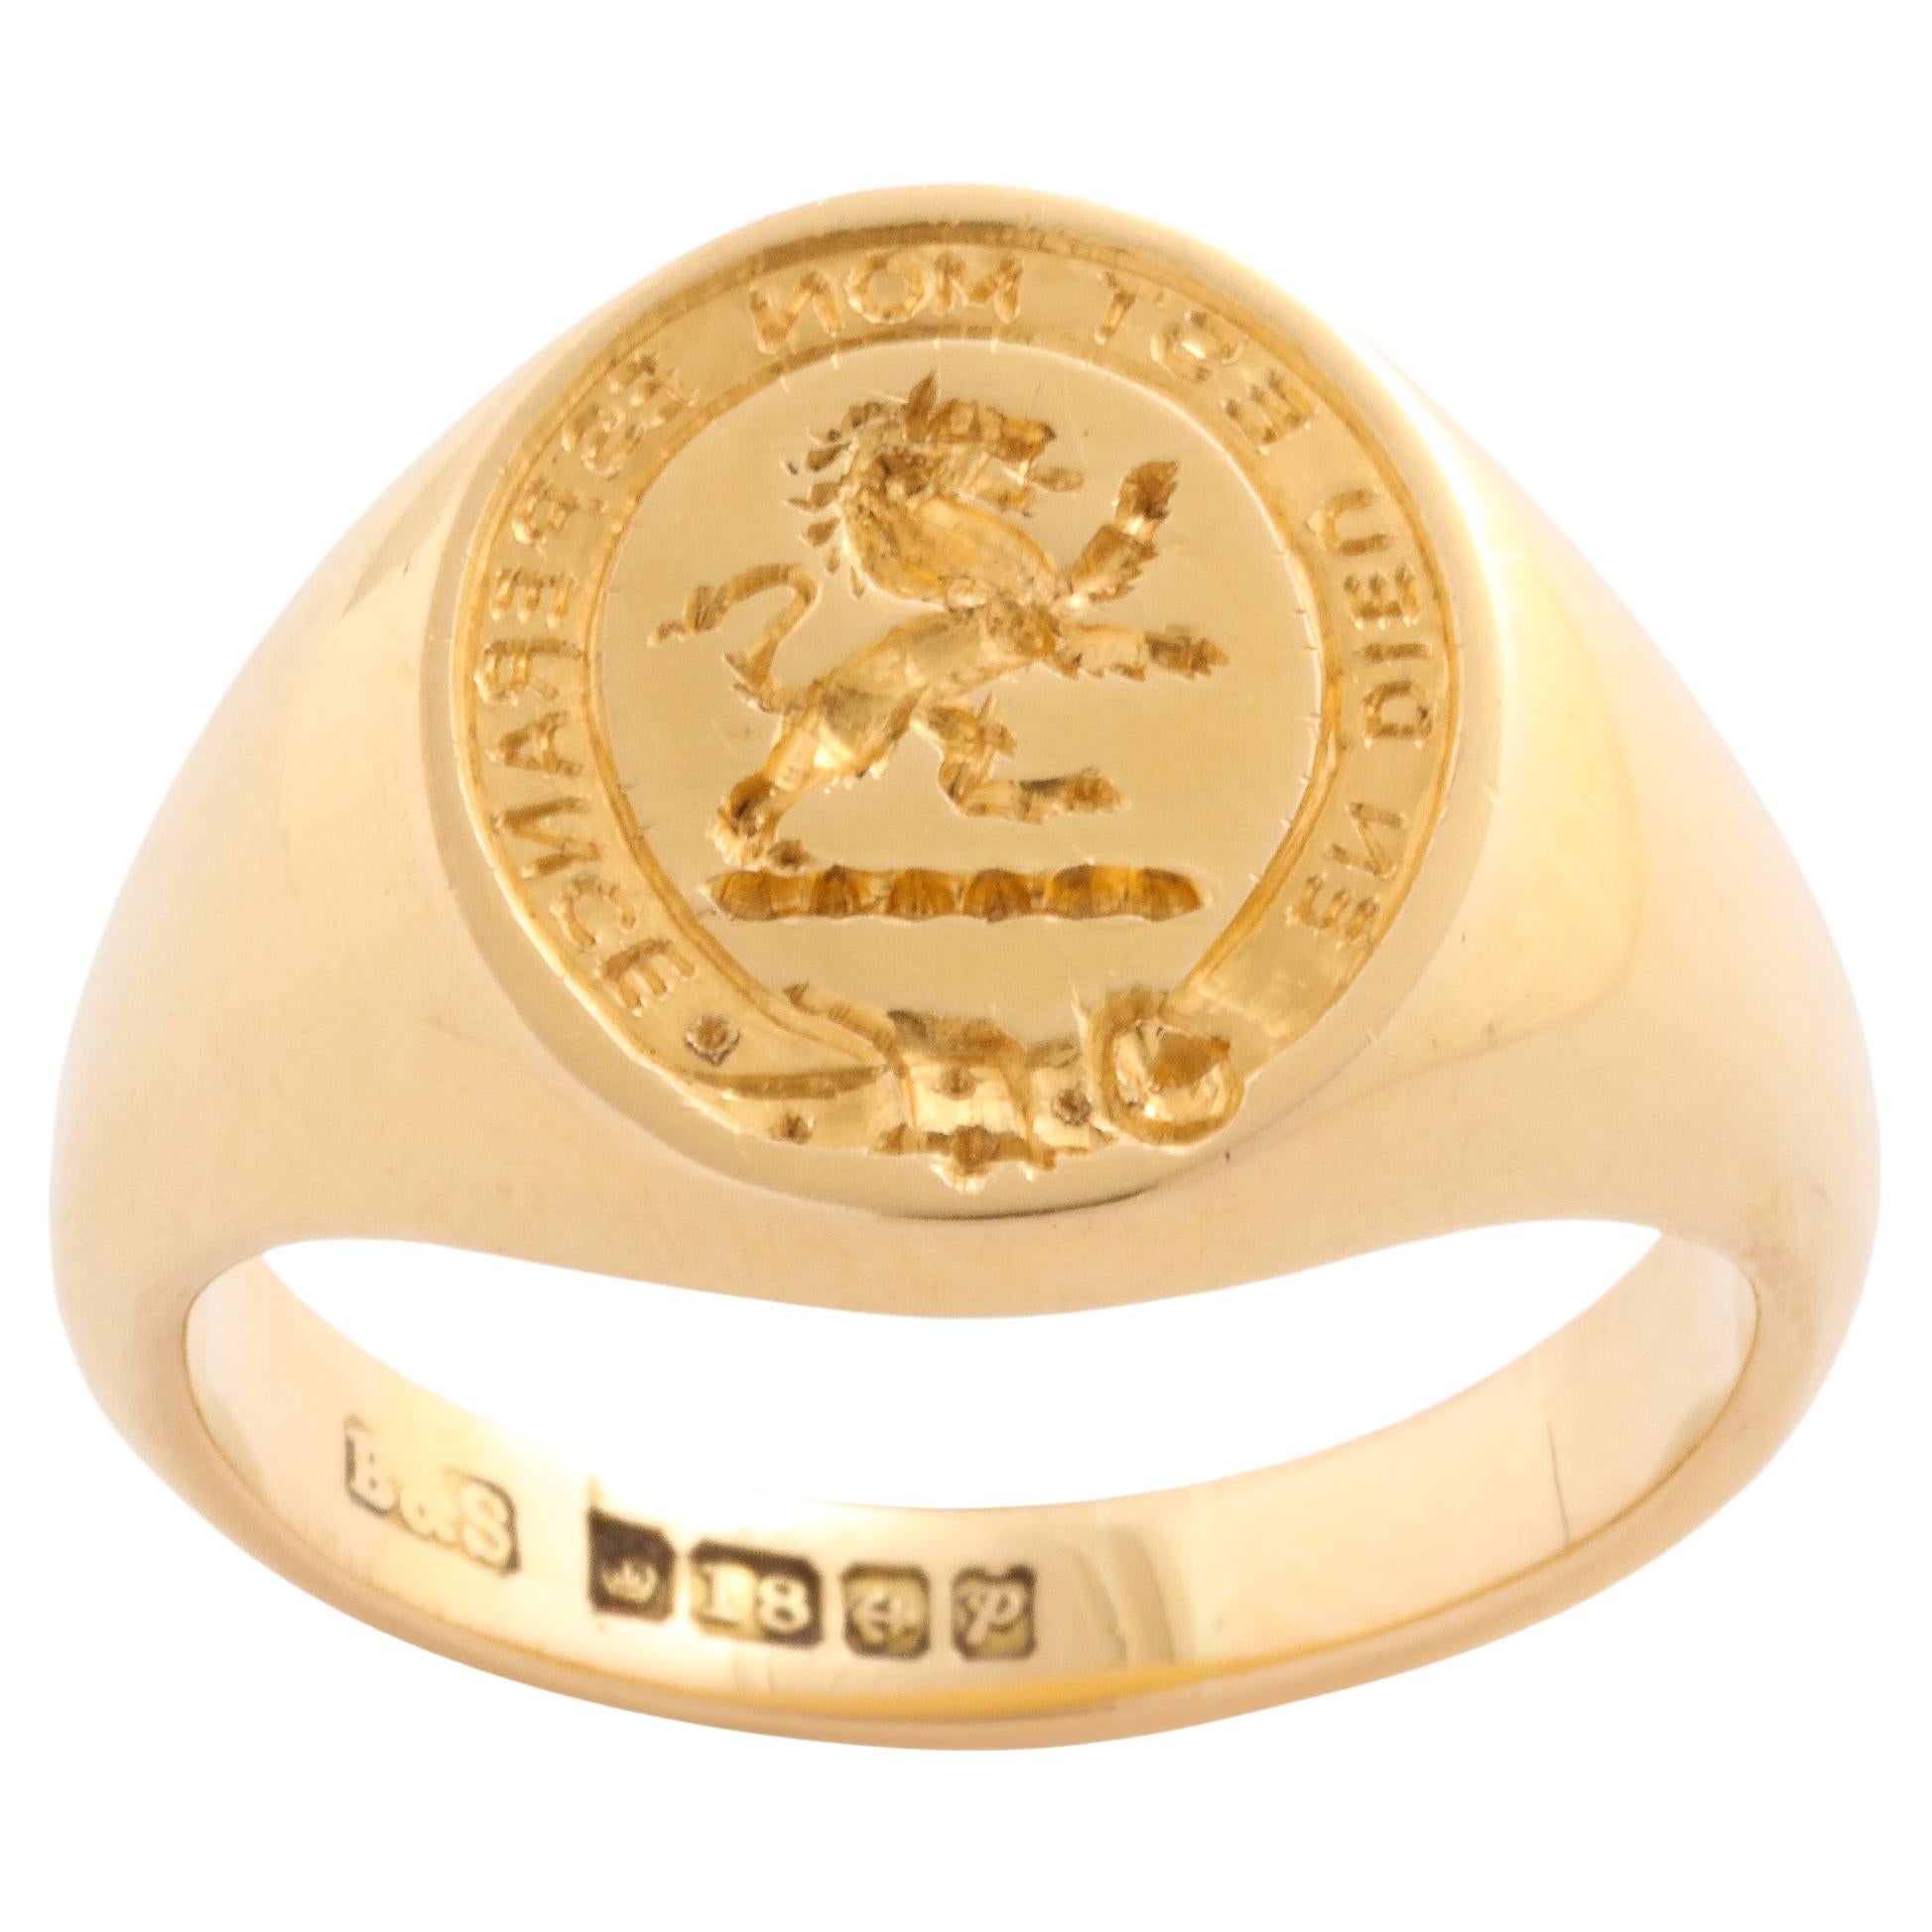 Vintage French 18 Kt Gold Rampant Lion Signet Ring